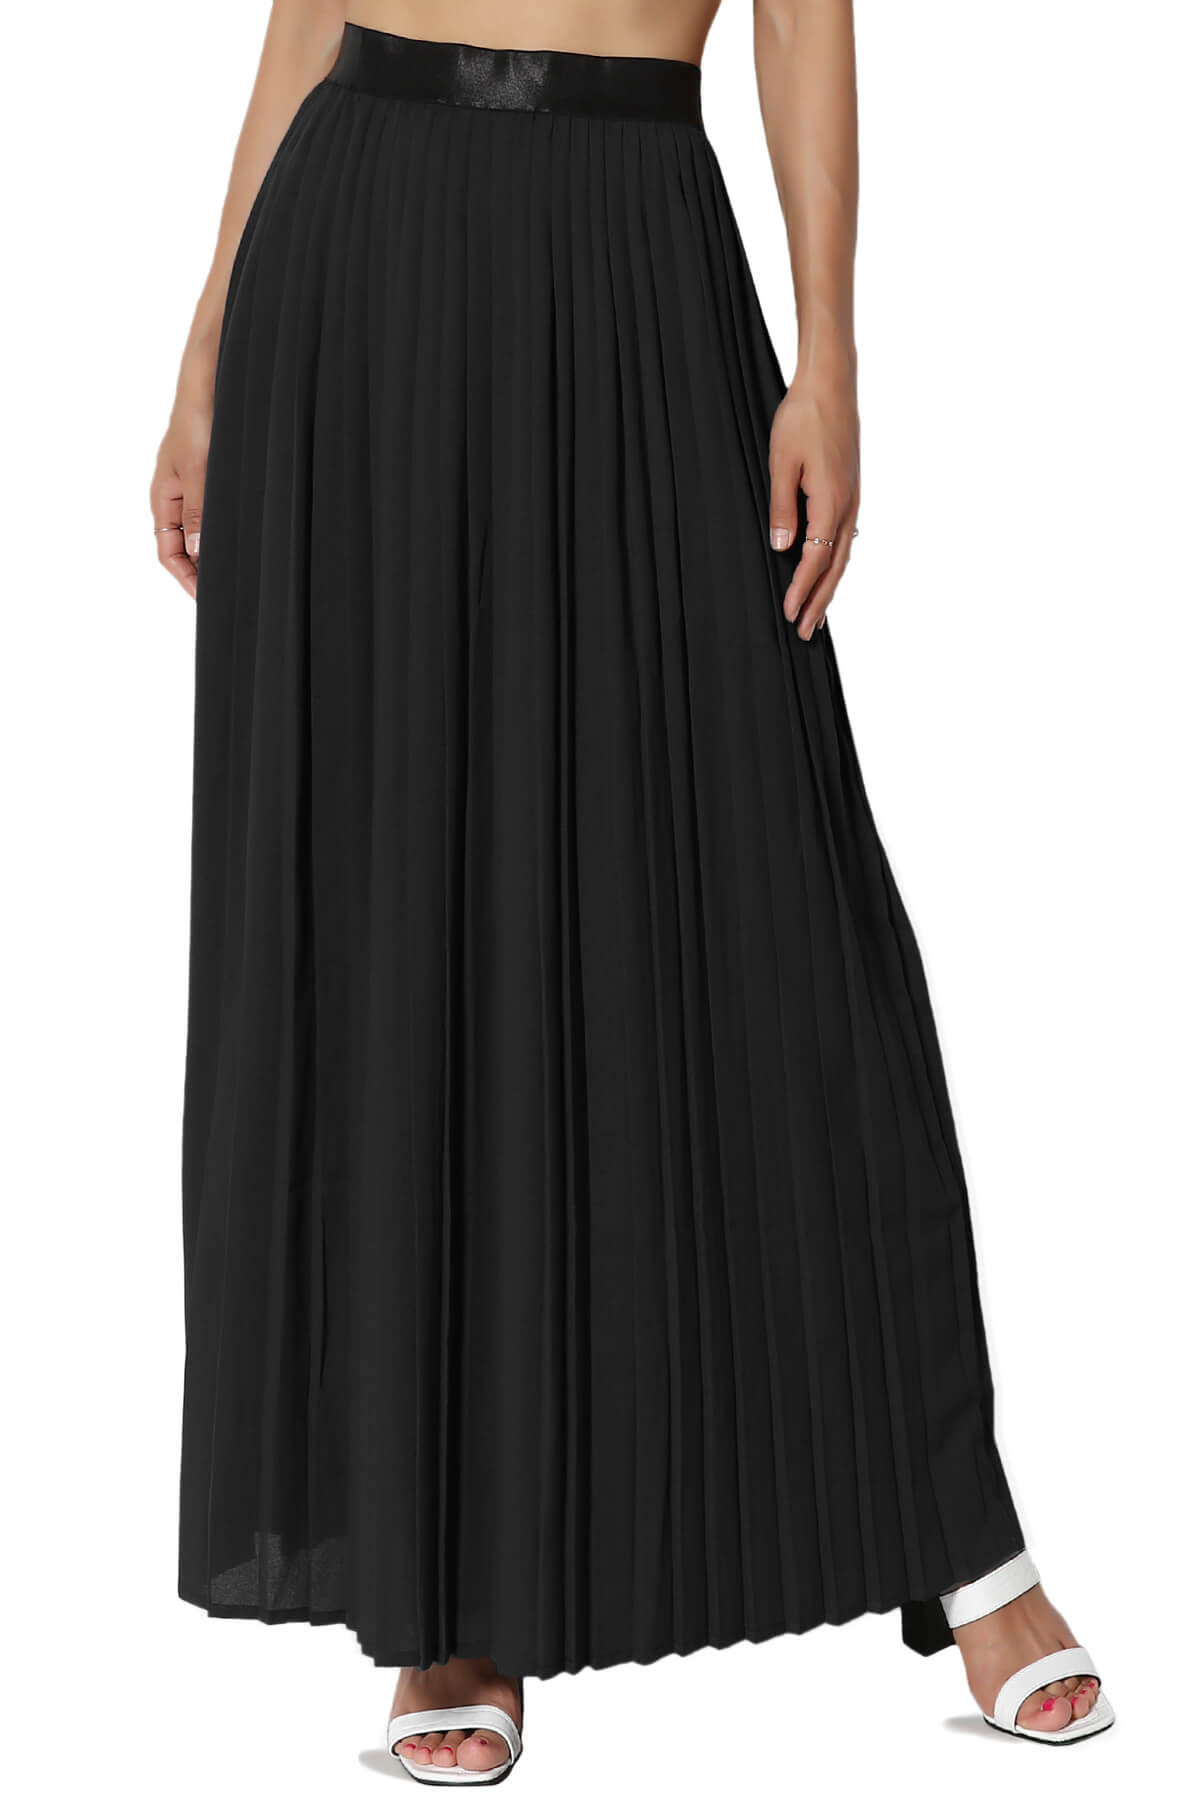 TheMogan Women's Elastic Waist Crepe Woven Pleated Long Maxi Skirt